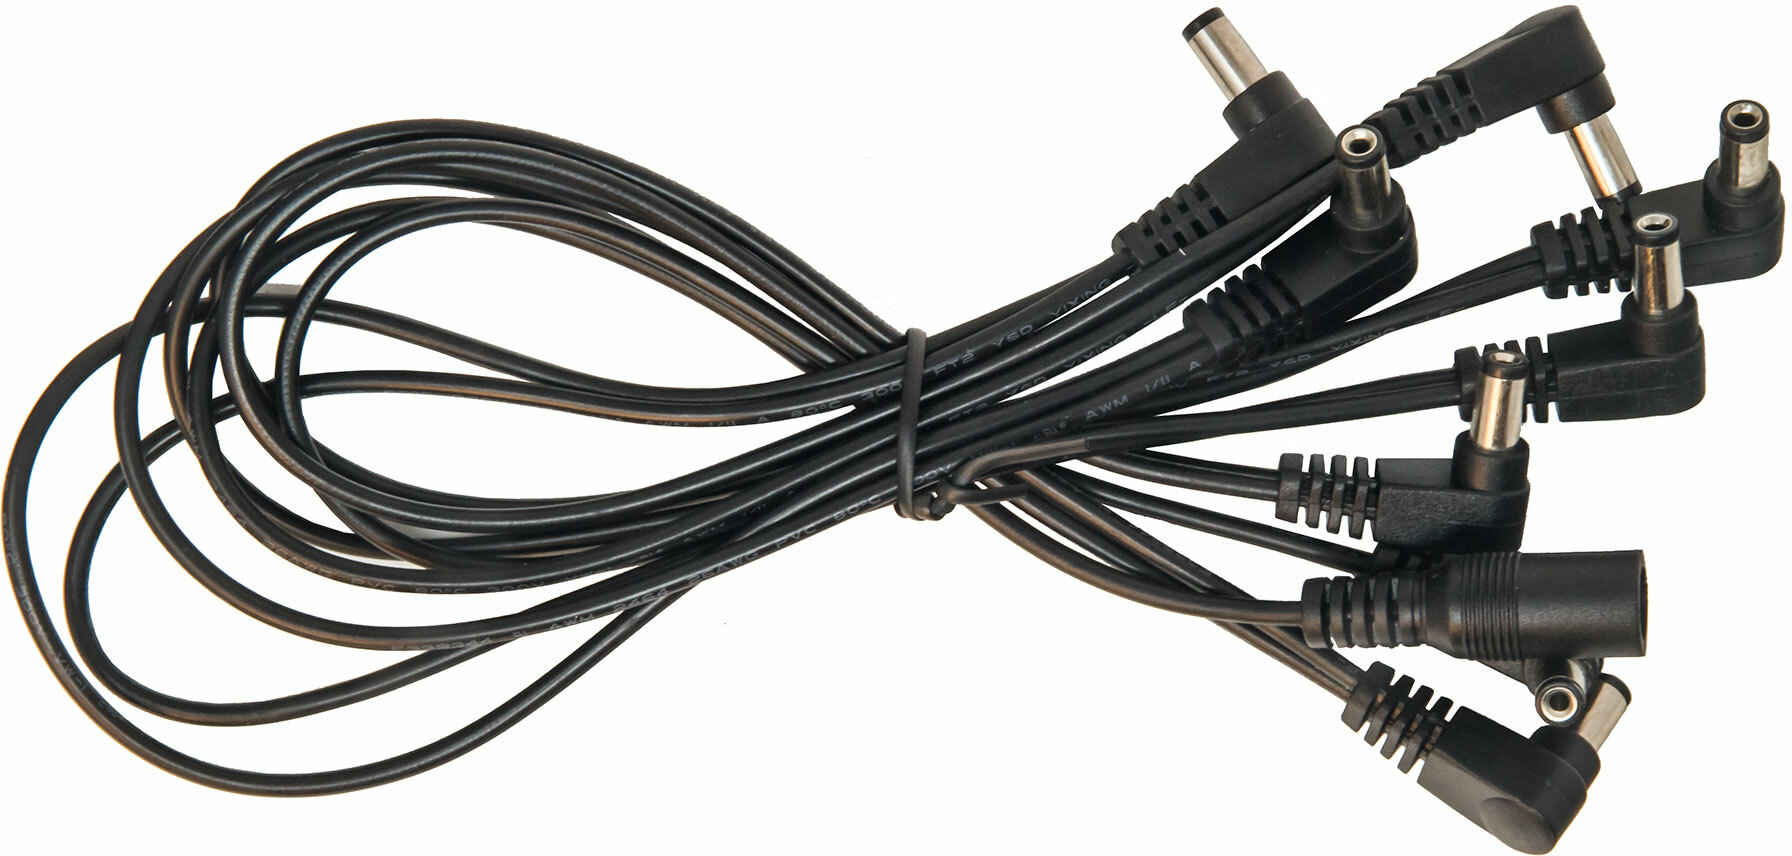 8-way Chain Pedal Power Cable Adaptateur connectique X-tone